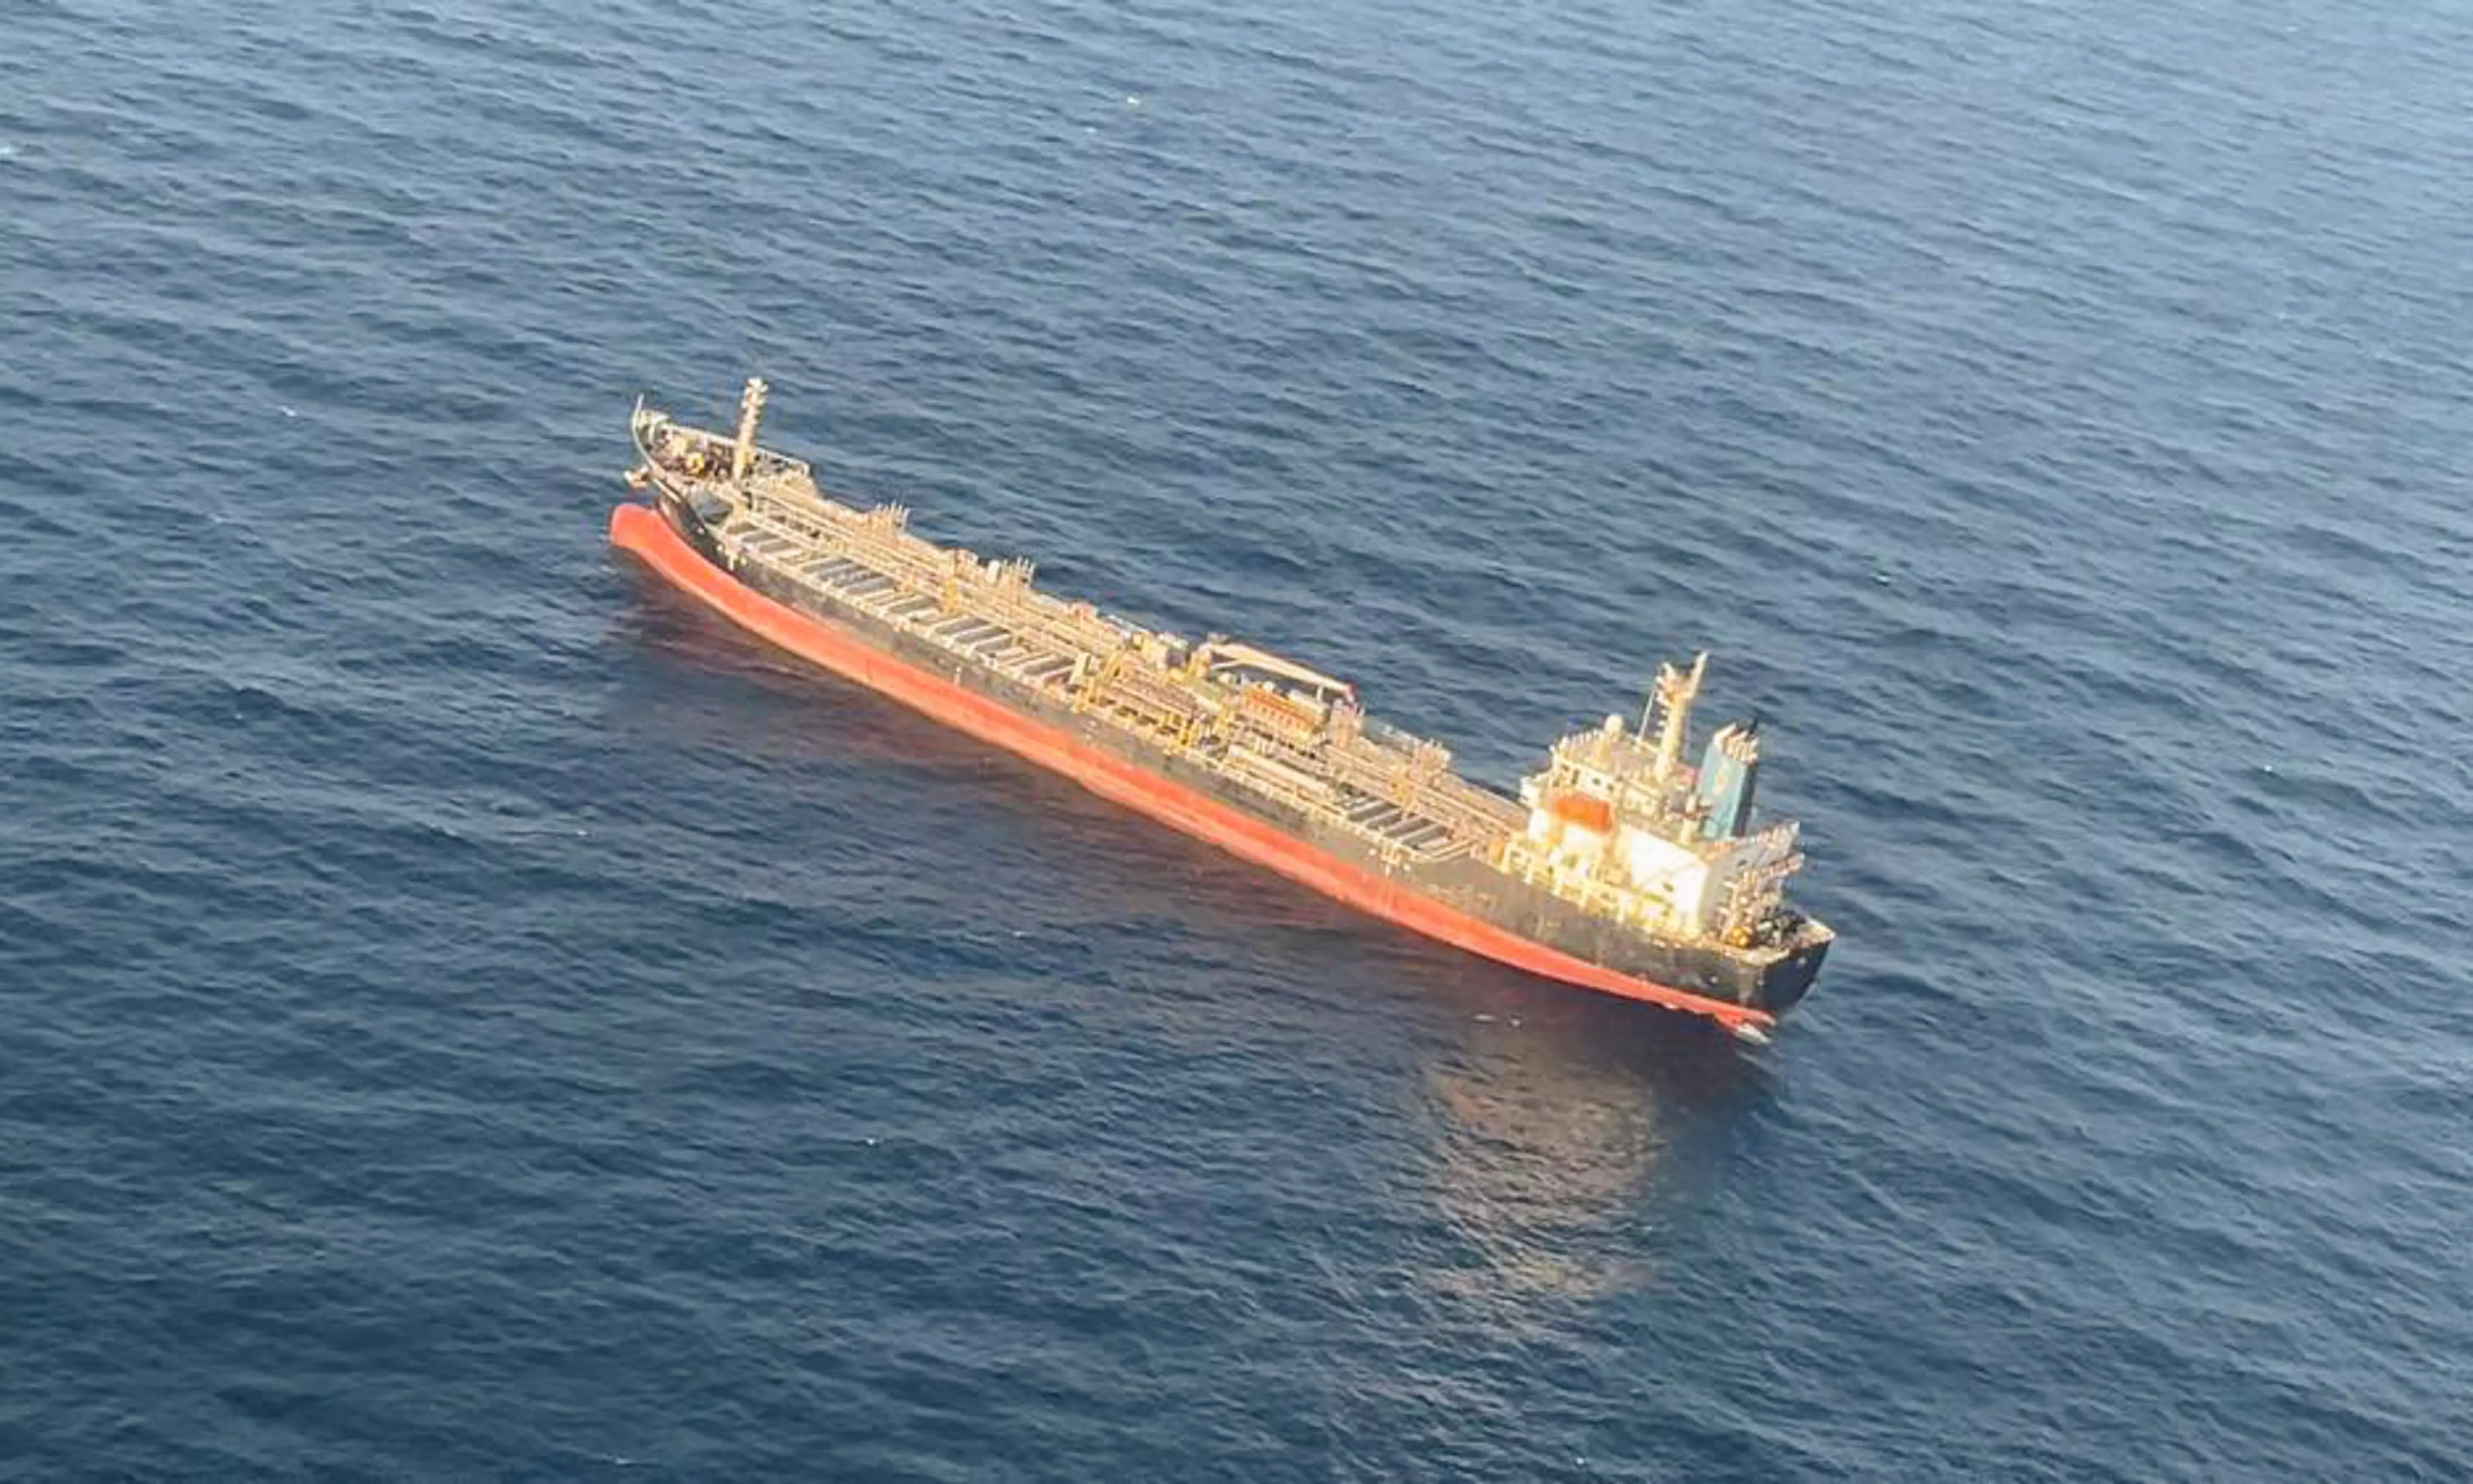 Drone attack: Navy begins ‘focused’ maritime security ops in Arabian Sea